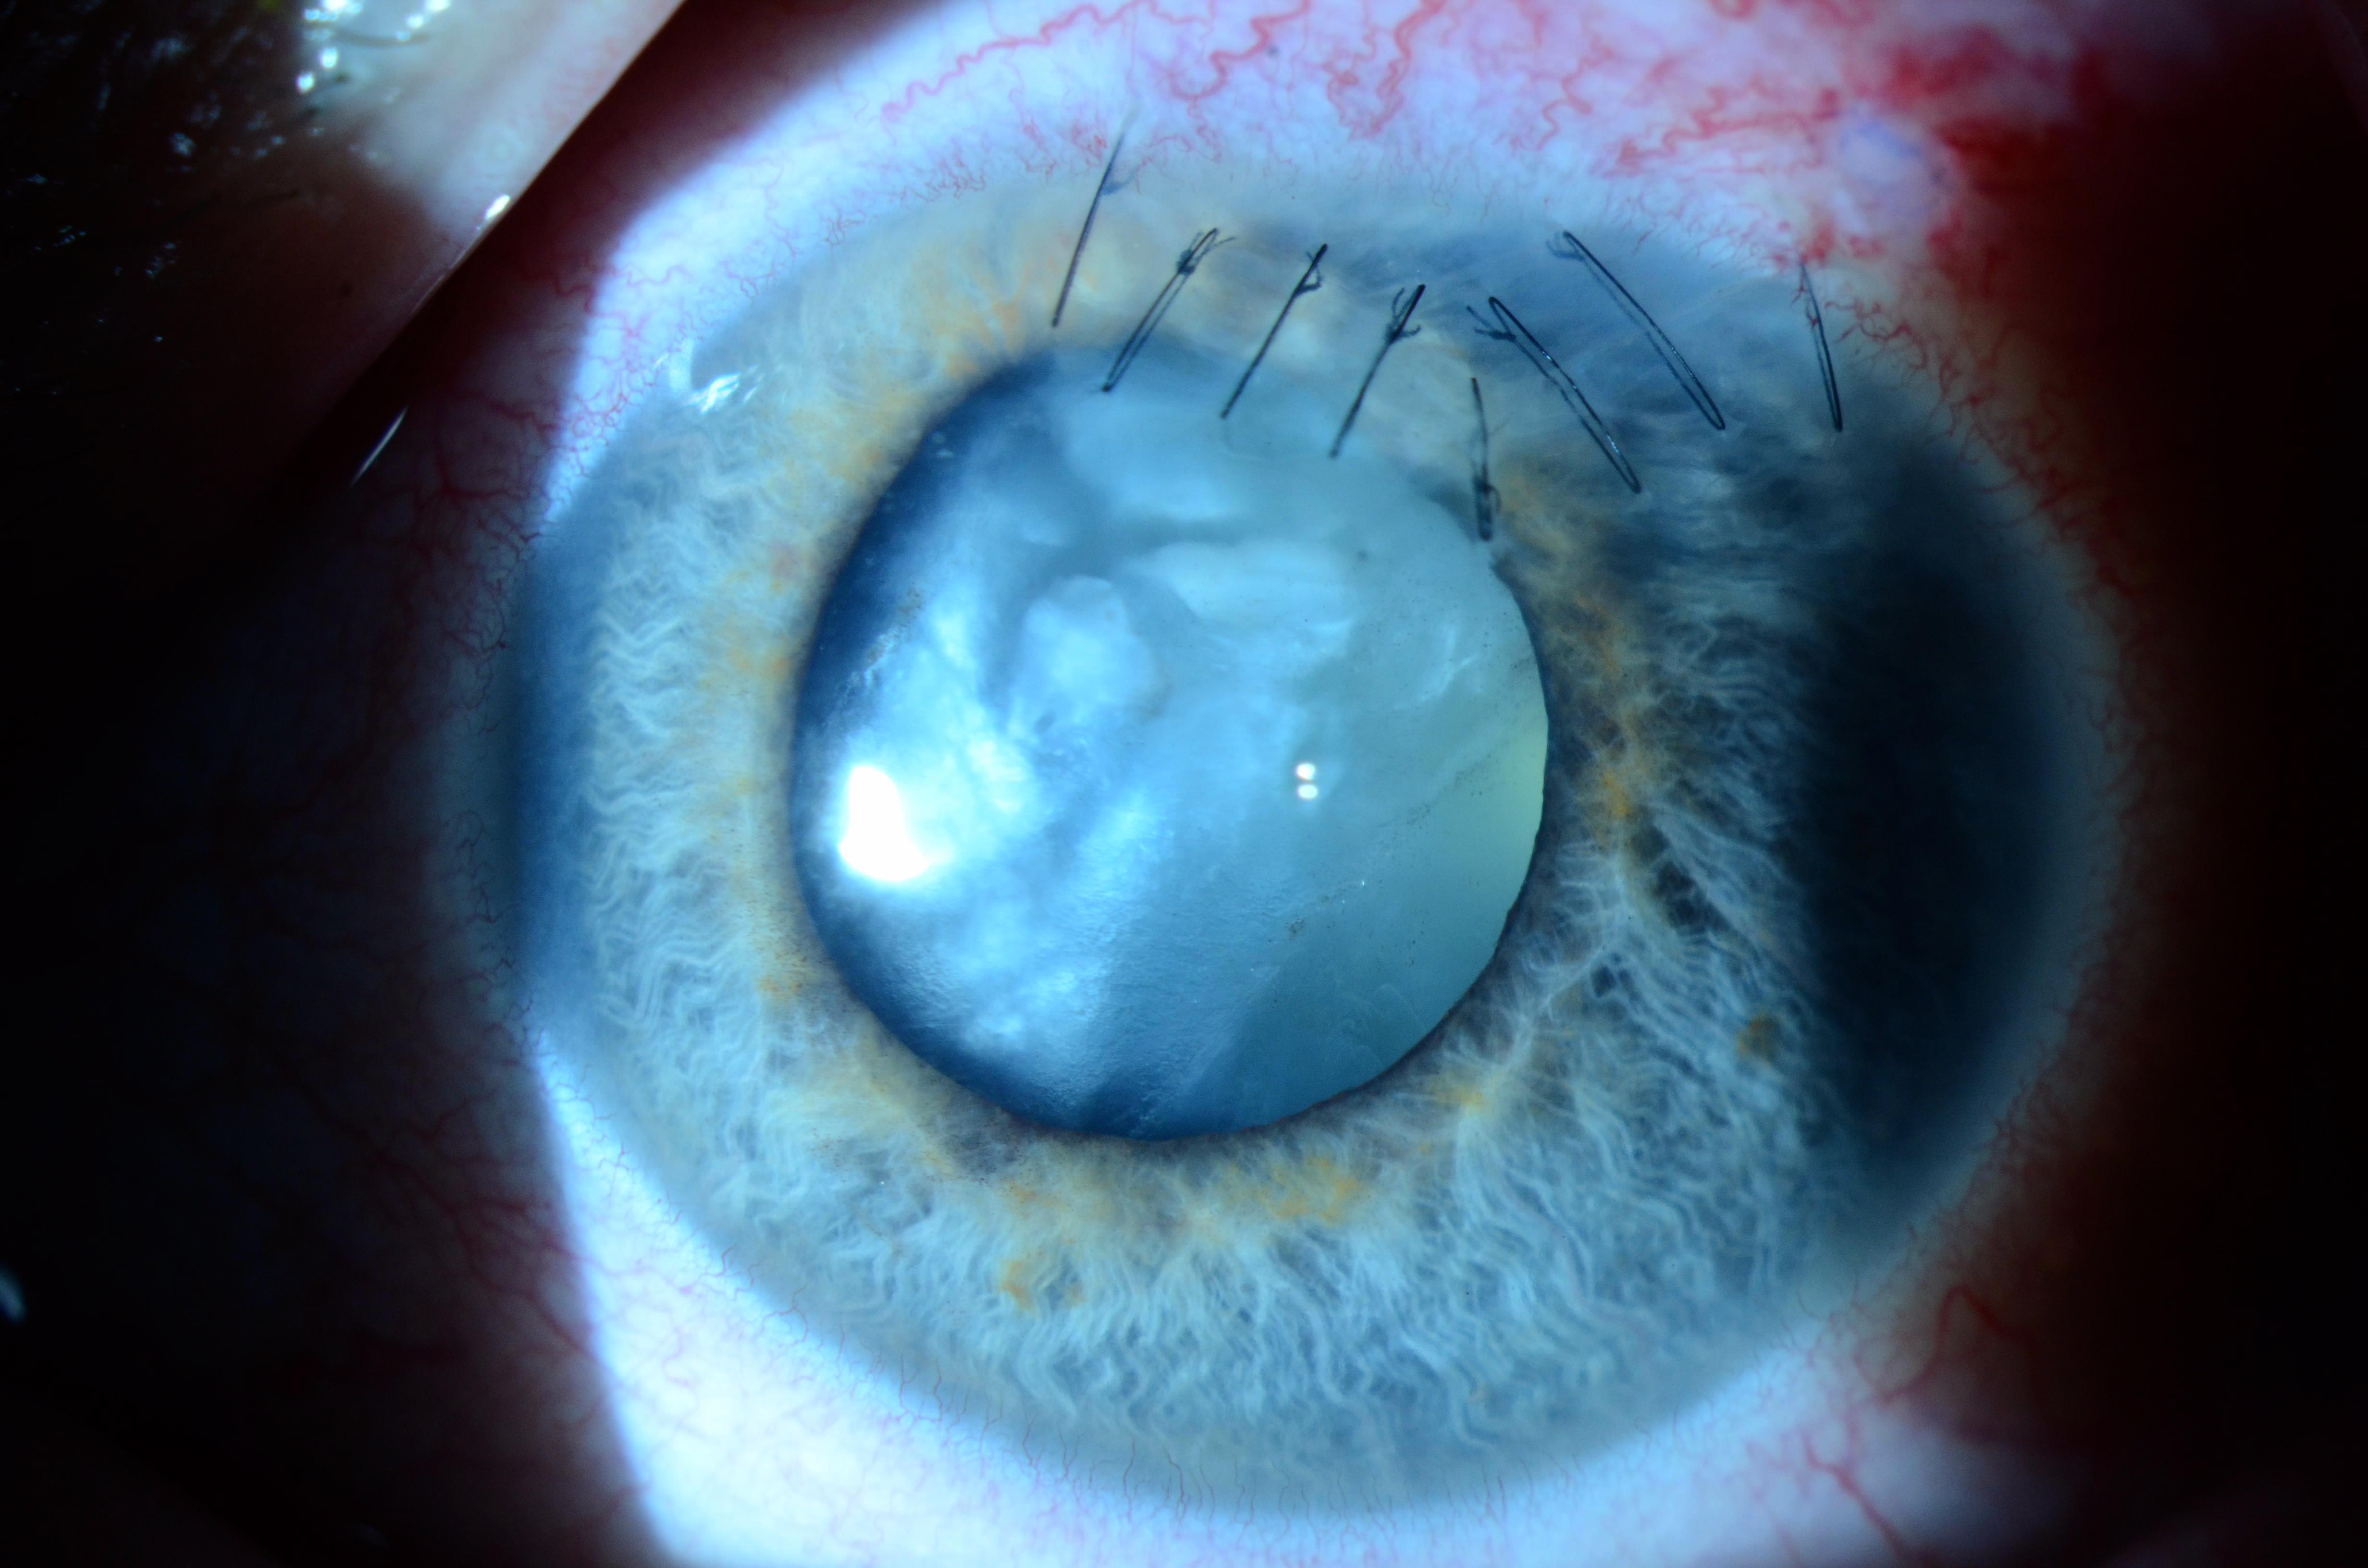 Traumatic Cataract Secondary to Penetrating Ocular Injury